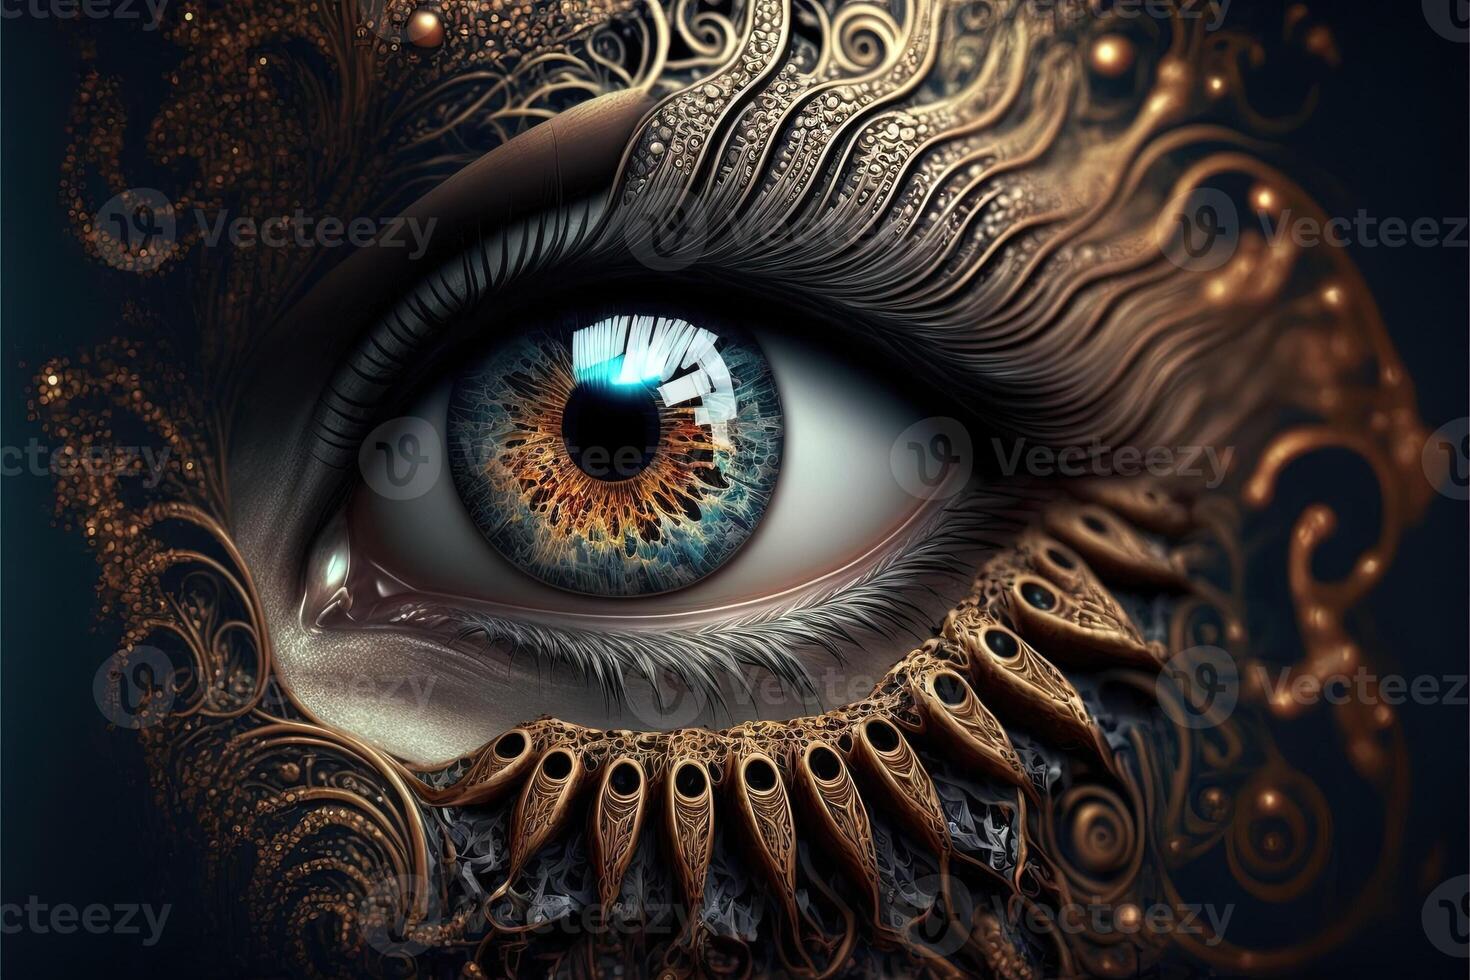 mascara eye maquillage of the future steampunk cyberpunk detail illustration photo